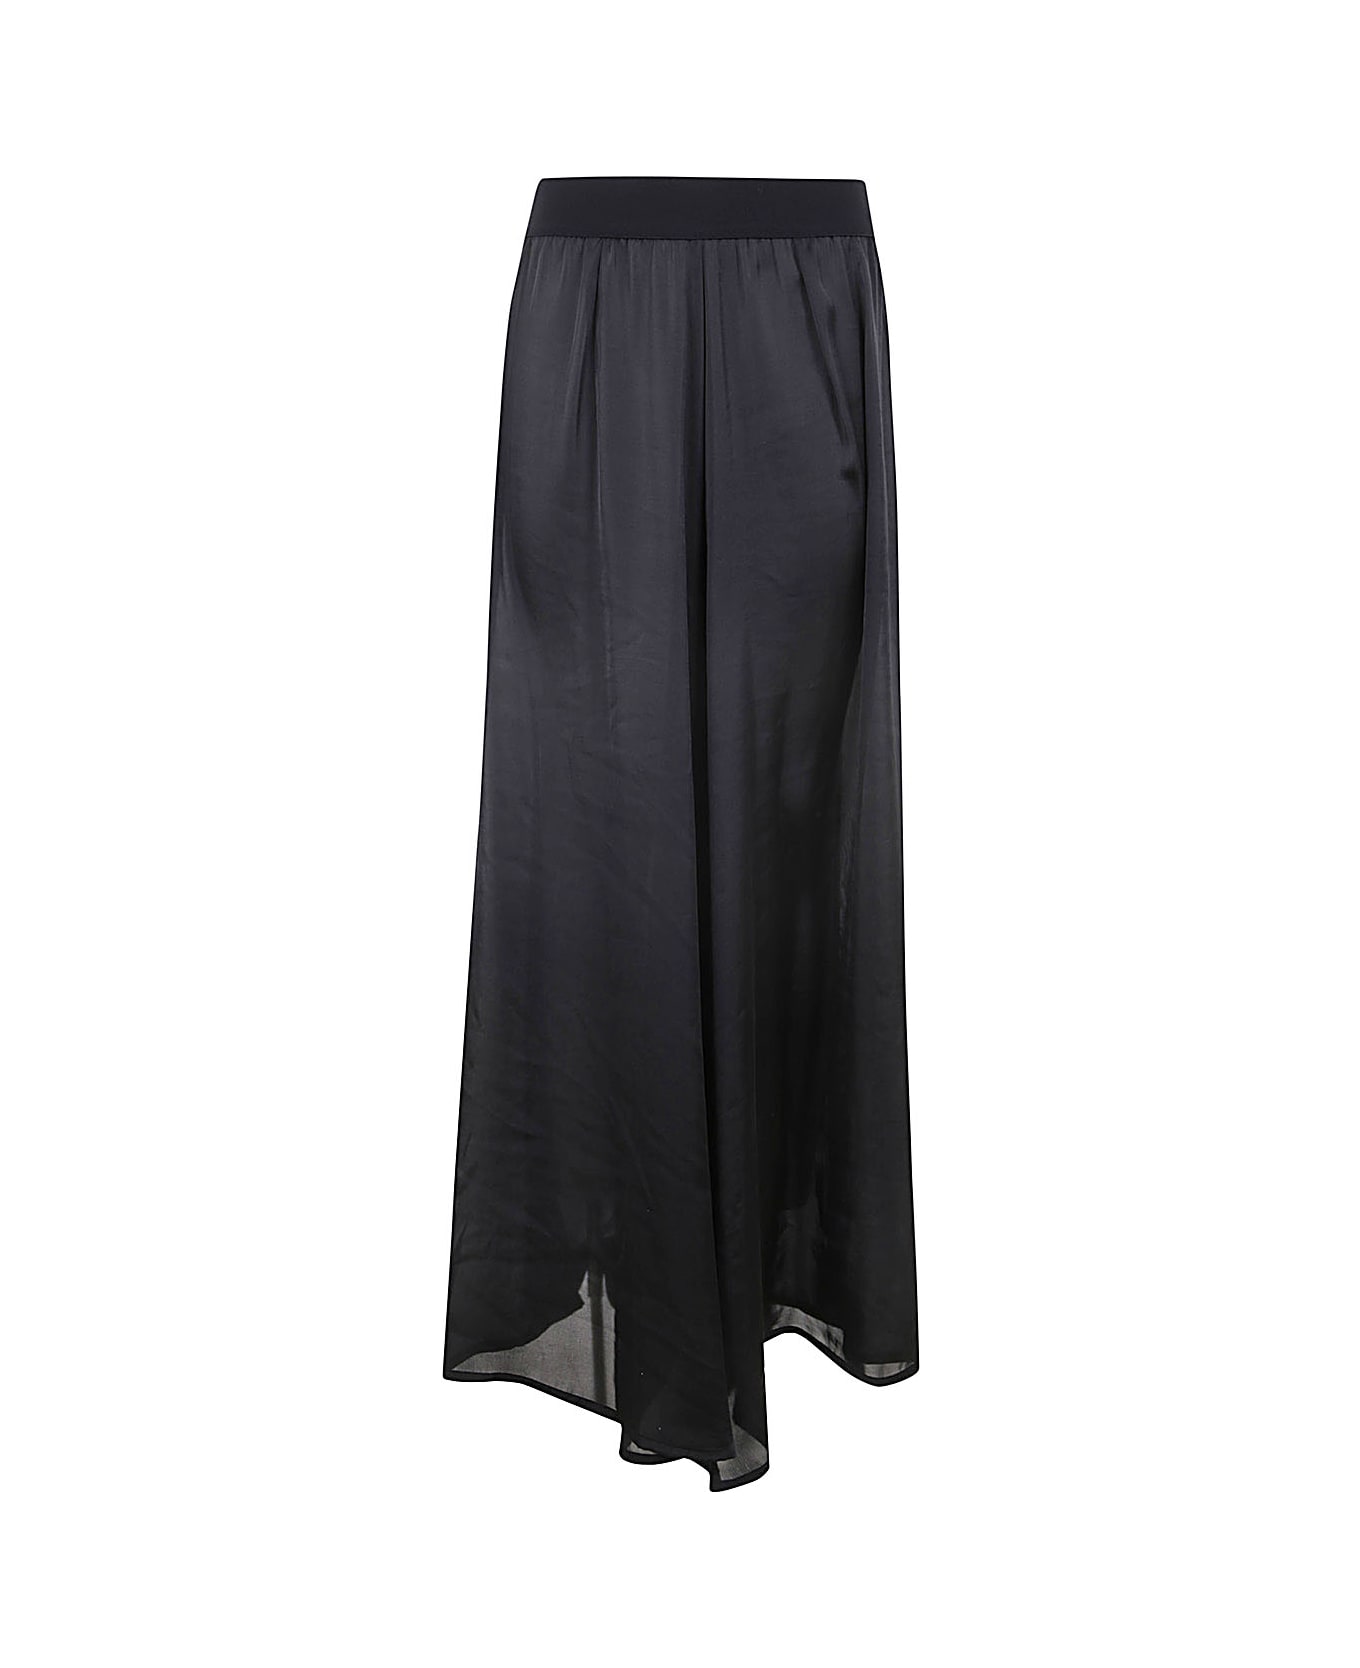 Maria Calderara Skirt Pants - Black